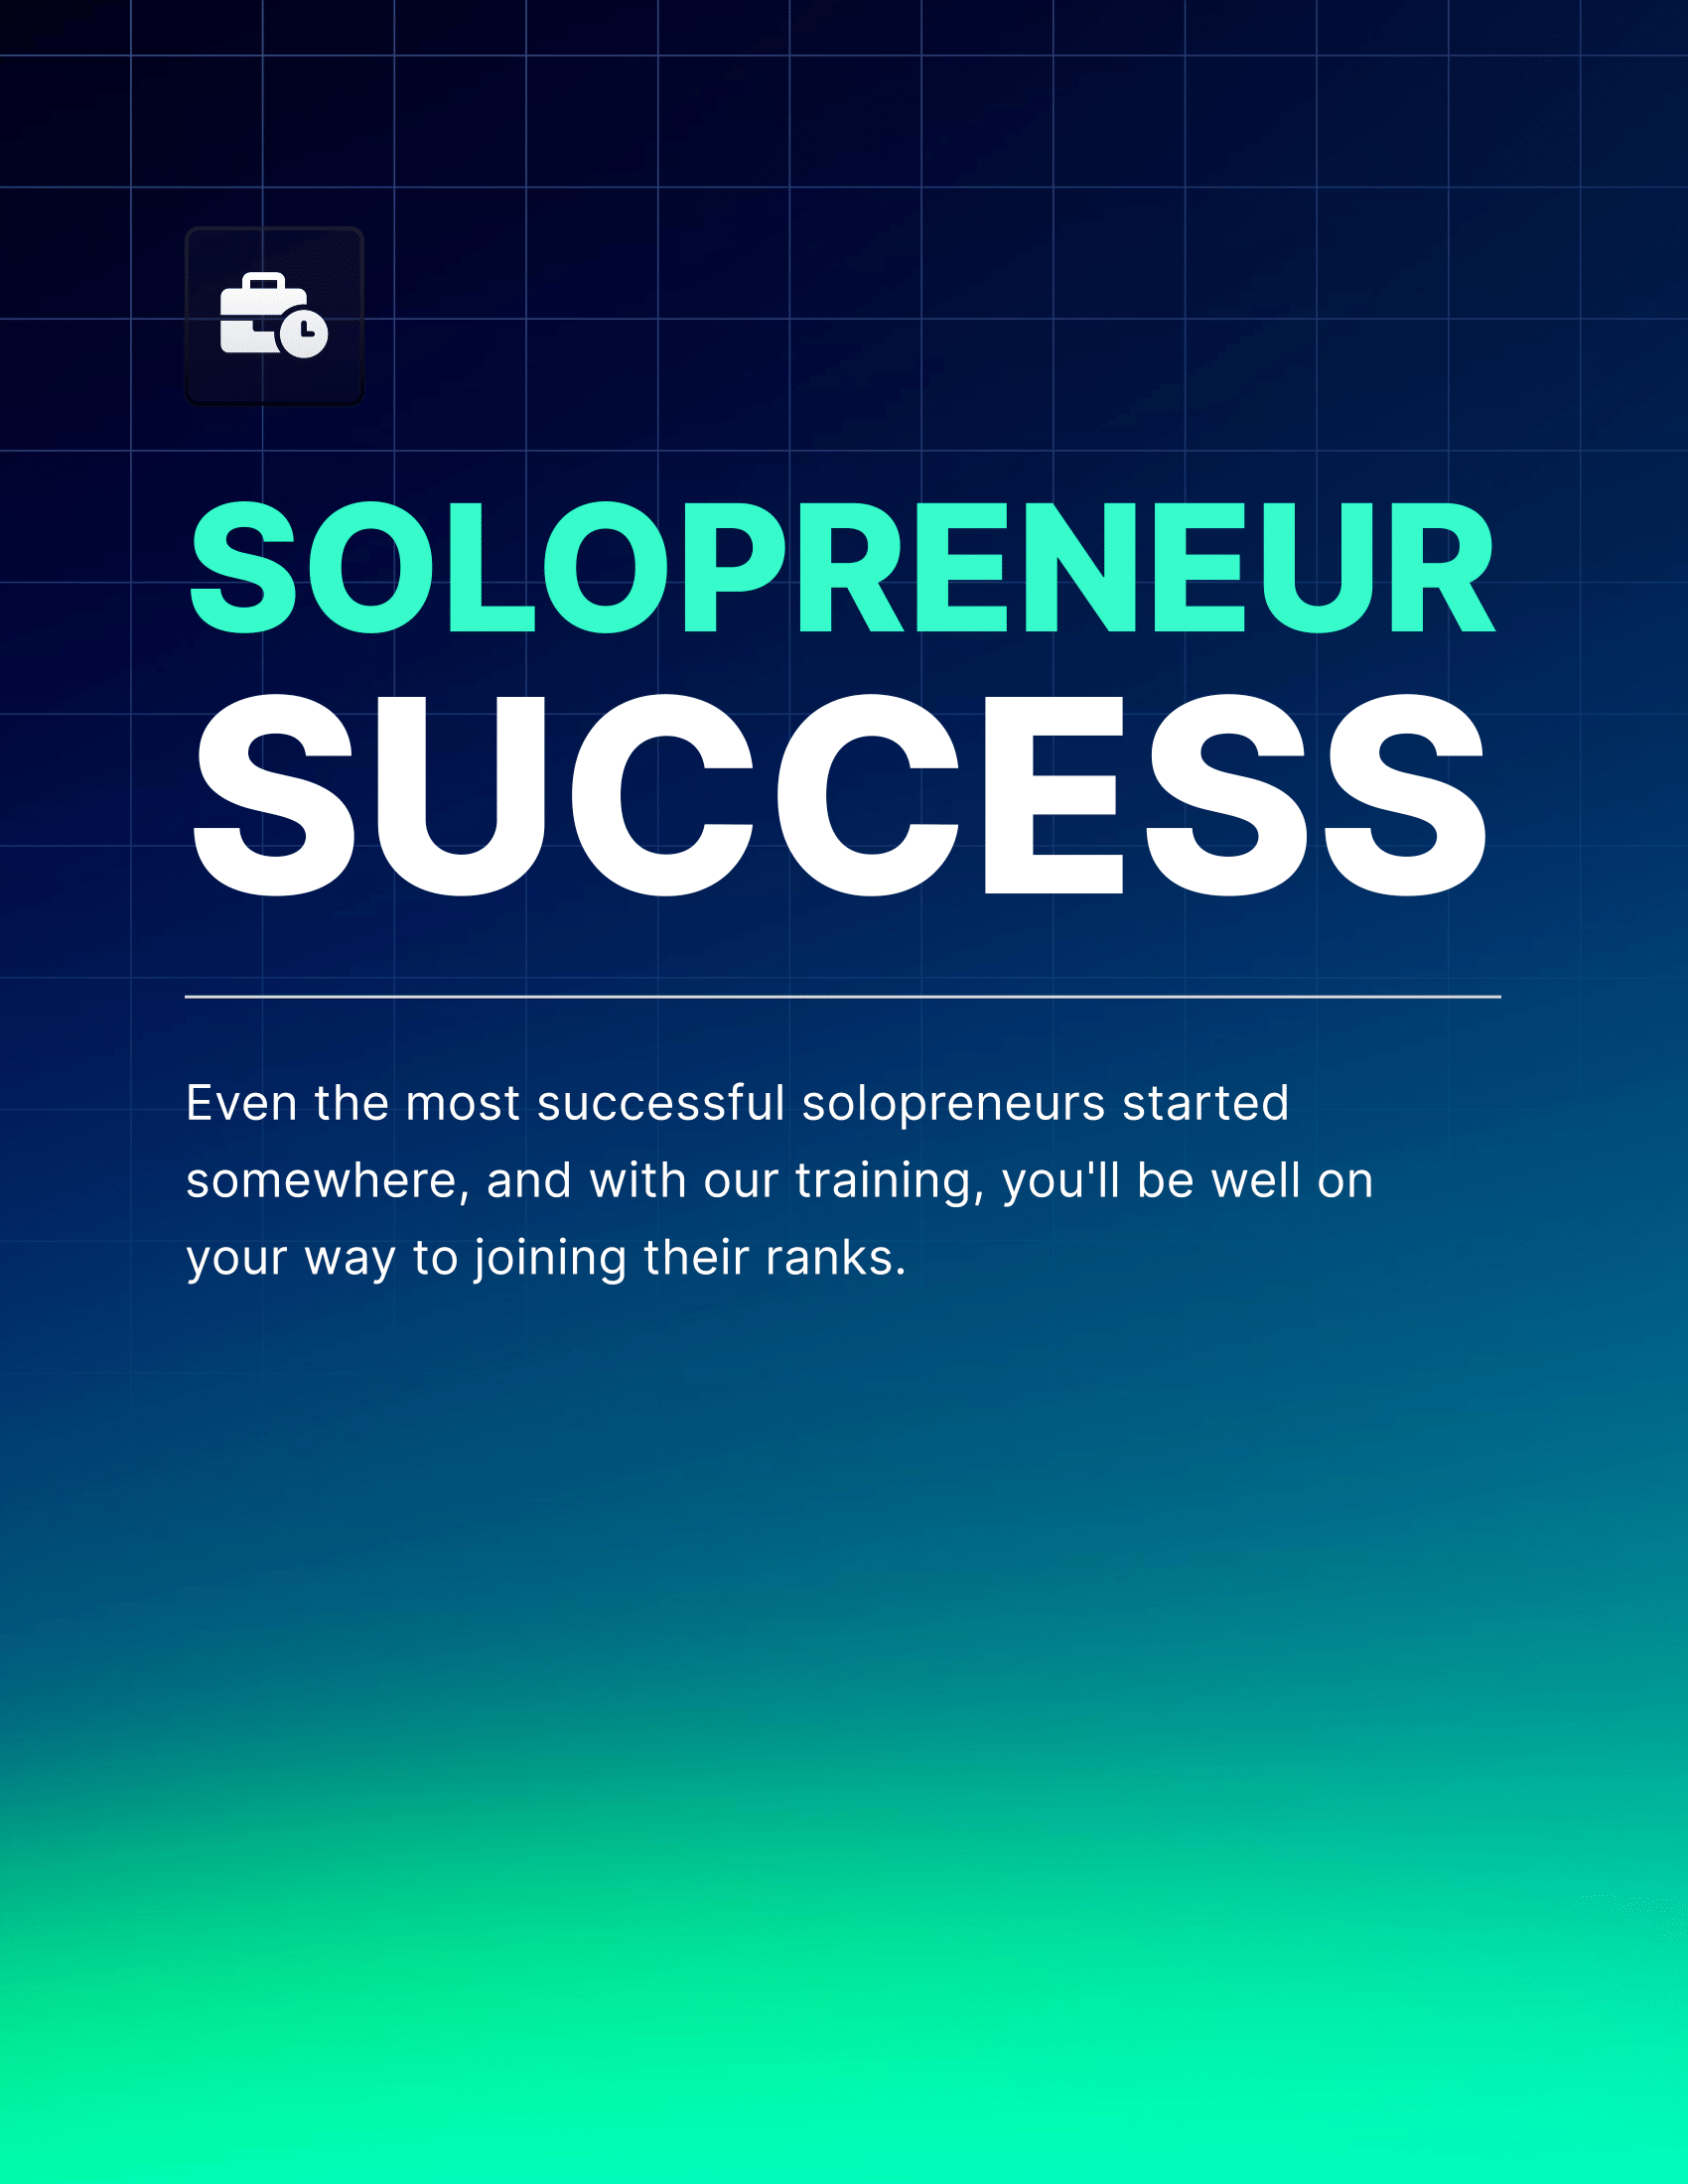 Solopreneur Success: Thriving in the Journey of Solo Entrepreneurship